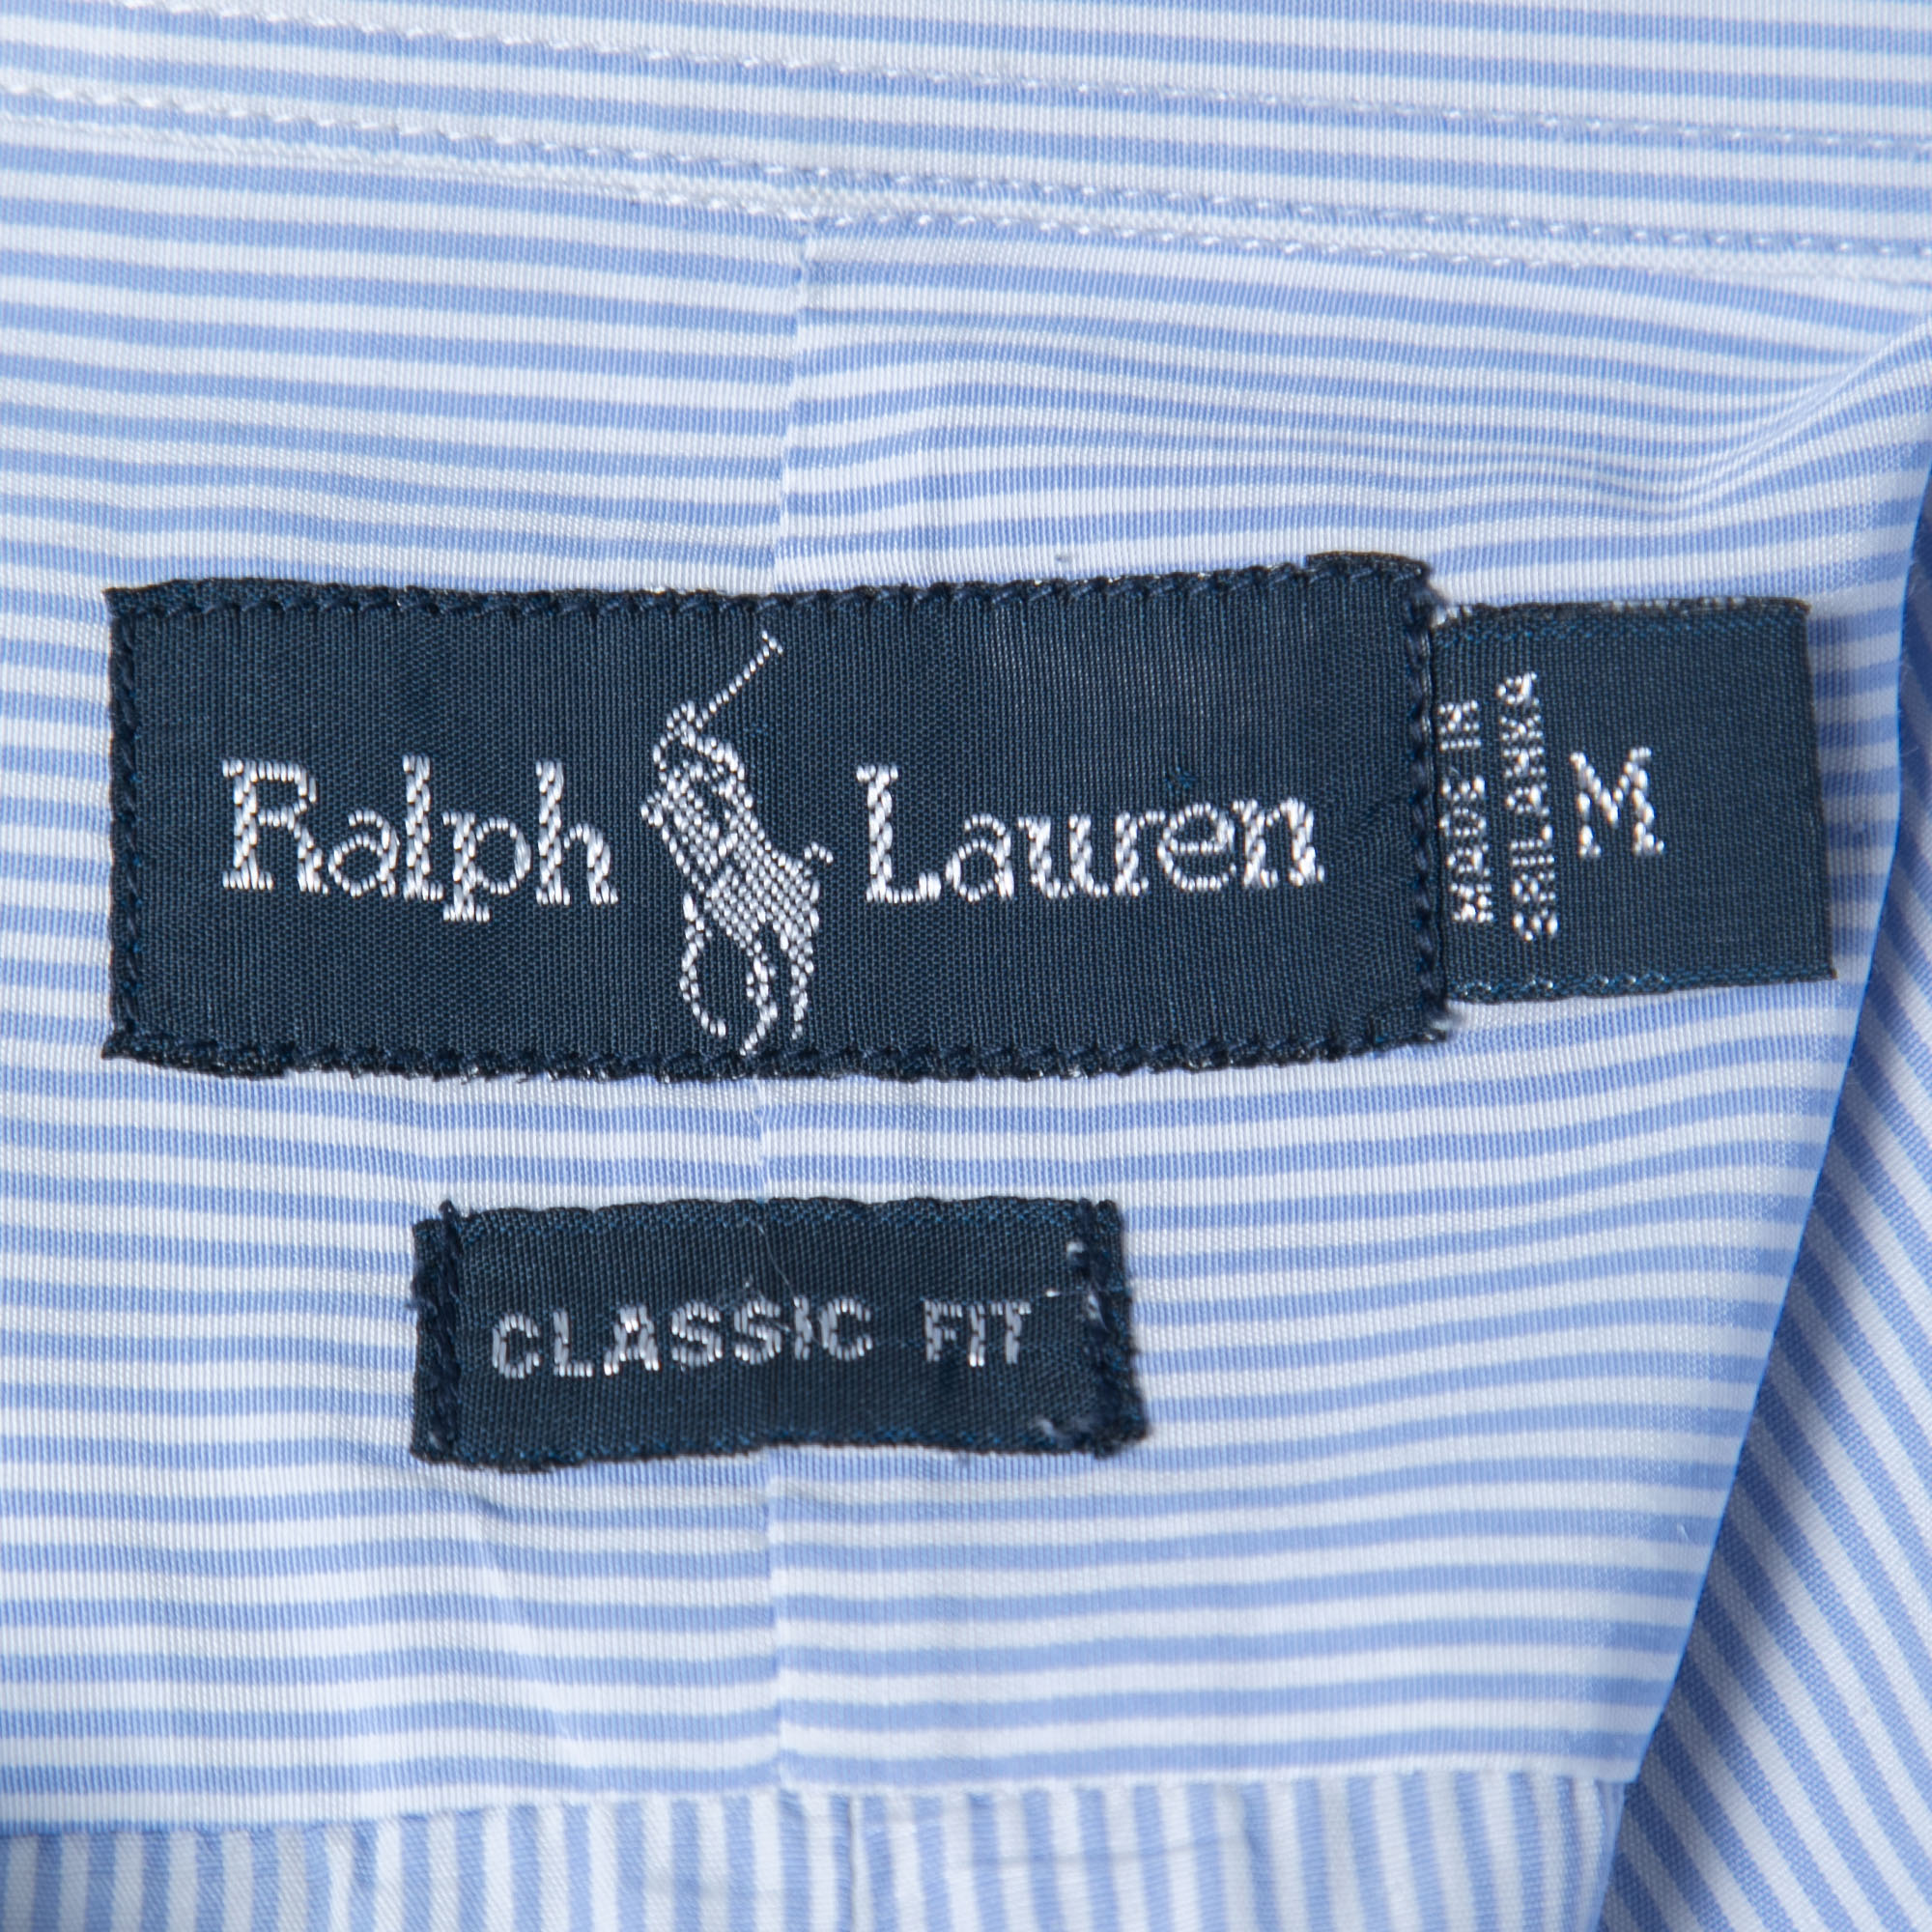 Ralph Lauren Blue Striped Cotton Button Down Full Sleeve Classic Fit Shirt M